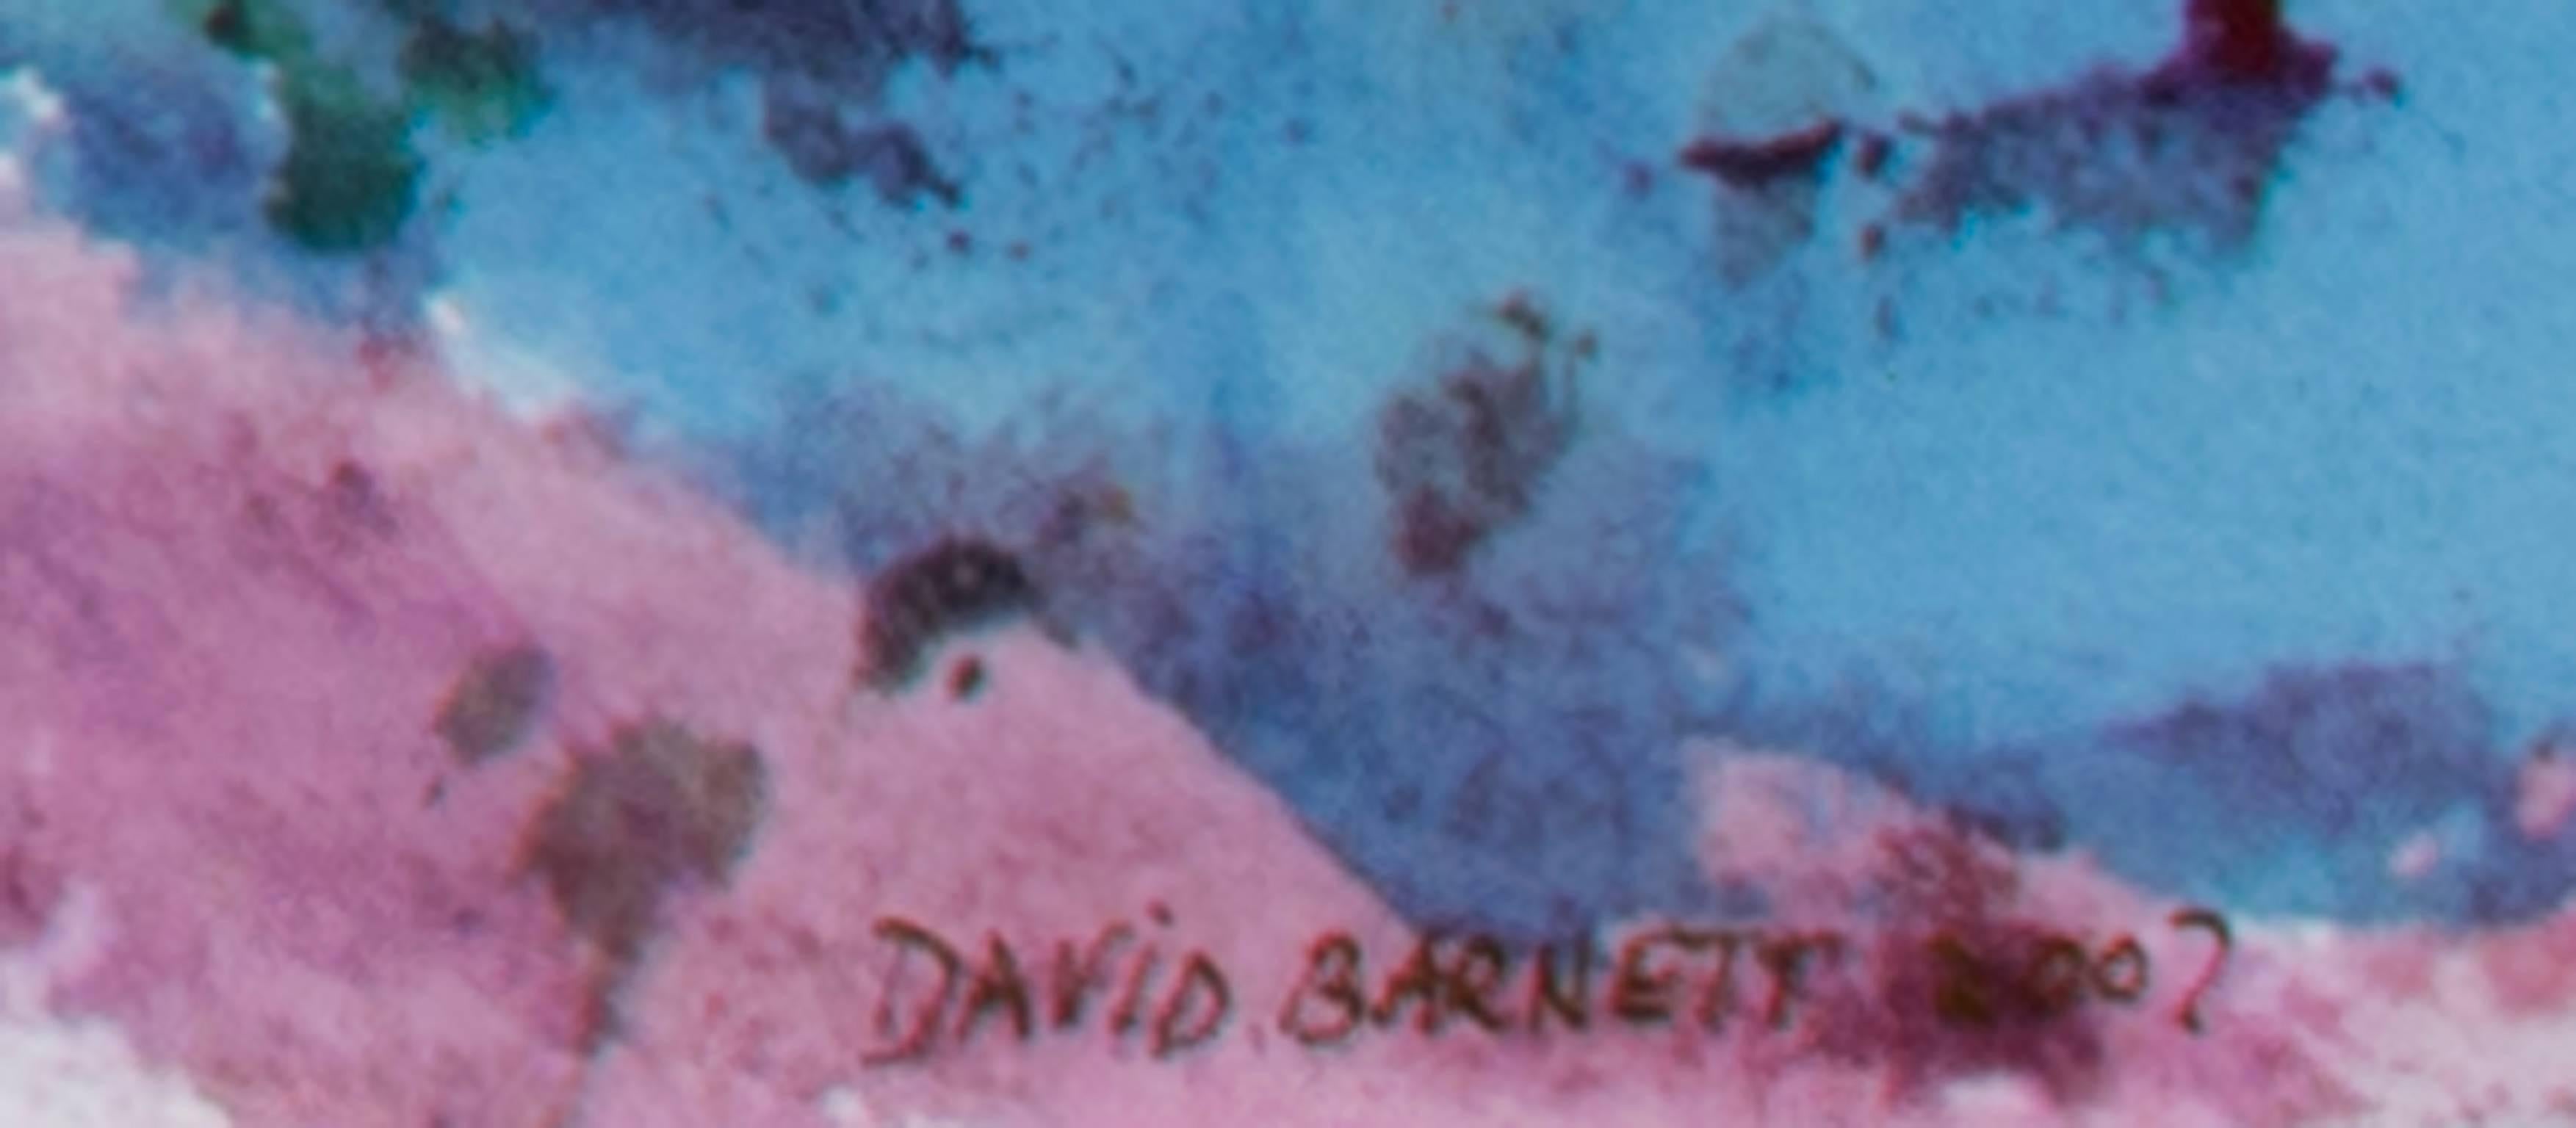 Contemporary abstract watercolor mixed media painting with blue brushstrokes - Abstract Mixed Media Art by David Barnett